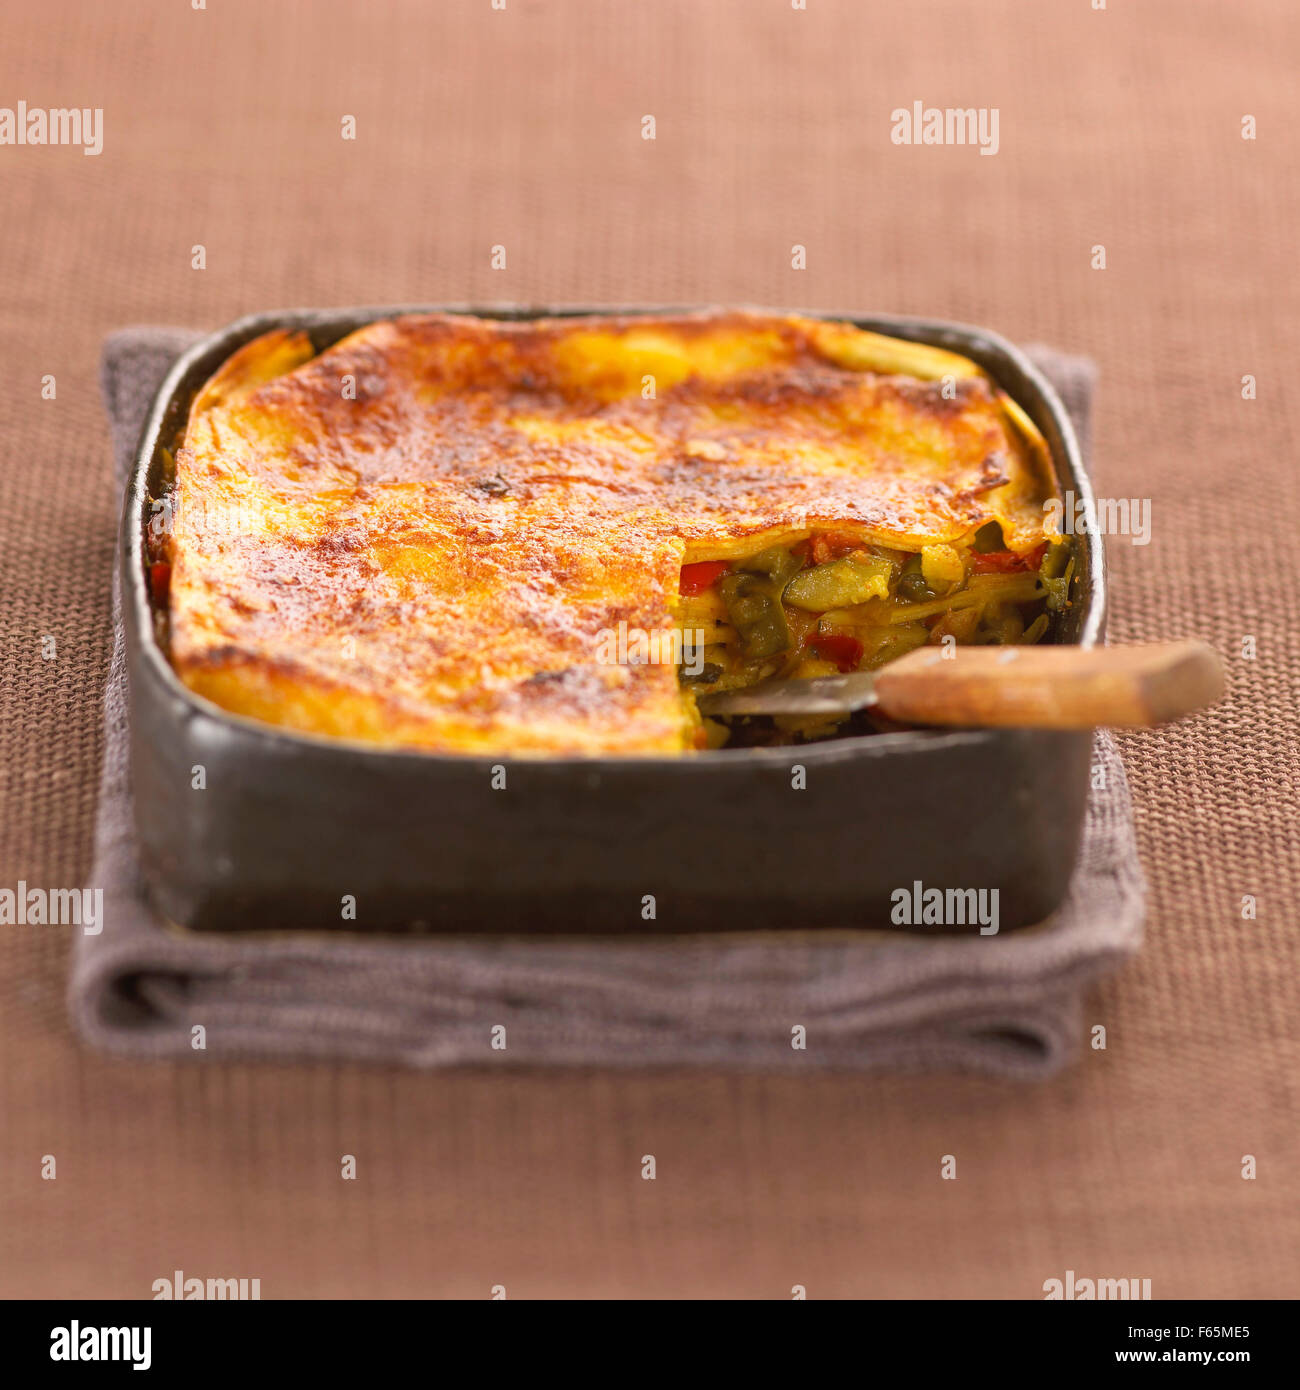 vegetable lasagna bake (topic: bakes) Stock Photo